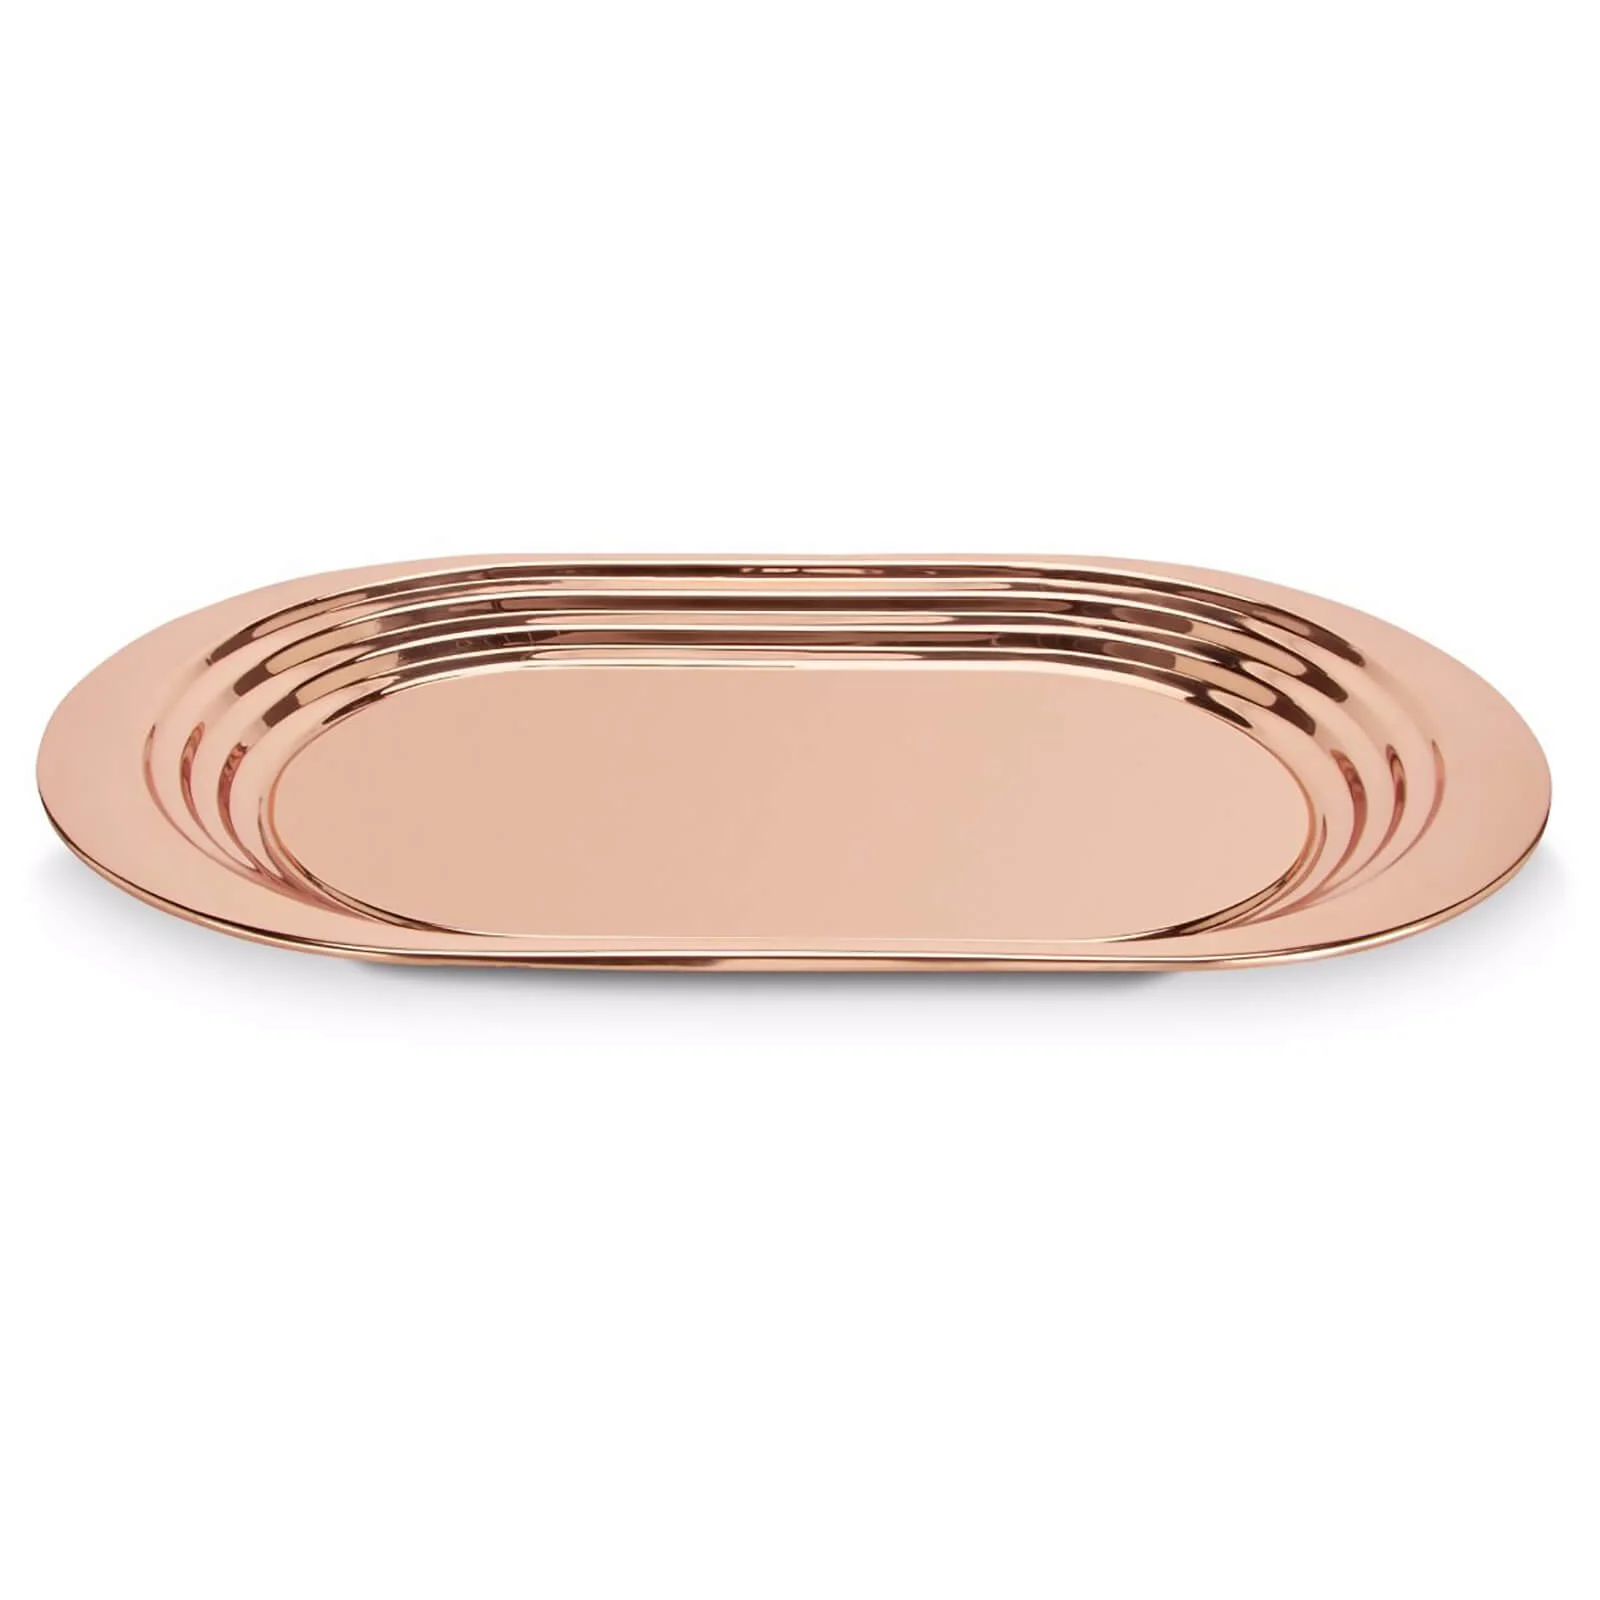 Tom Dixon Plum Tray - Copper Plated Image 1